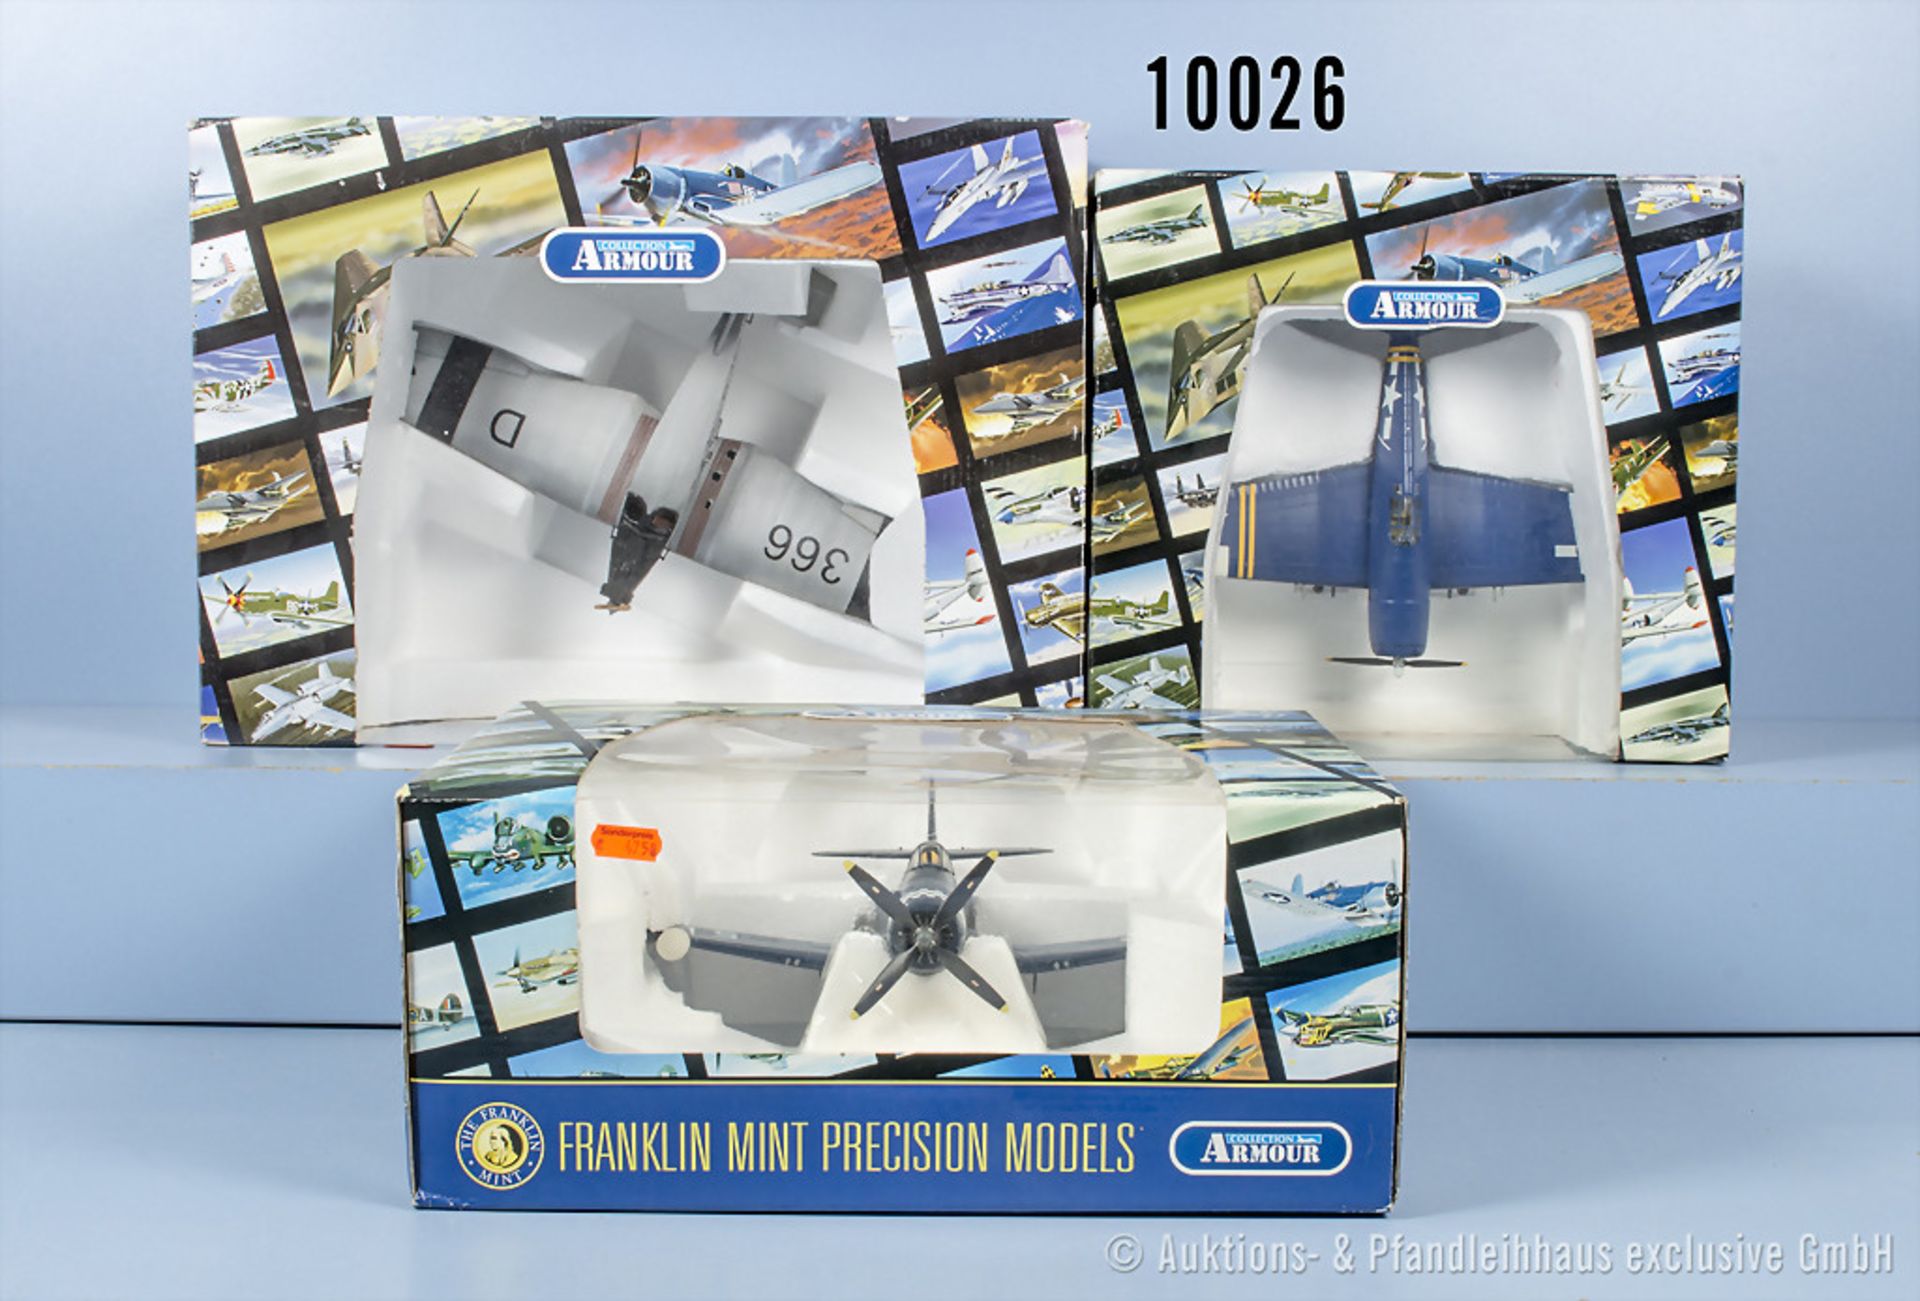 3 Franklin Mint Precision Models Armour Collection Millitärflugzeuge, F014 Corsair-Phil ...